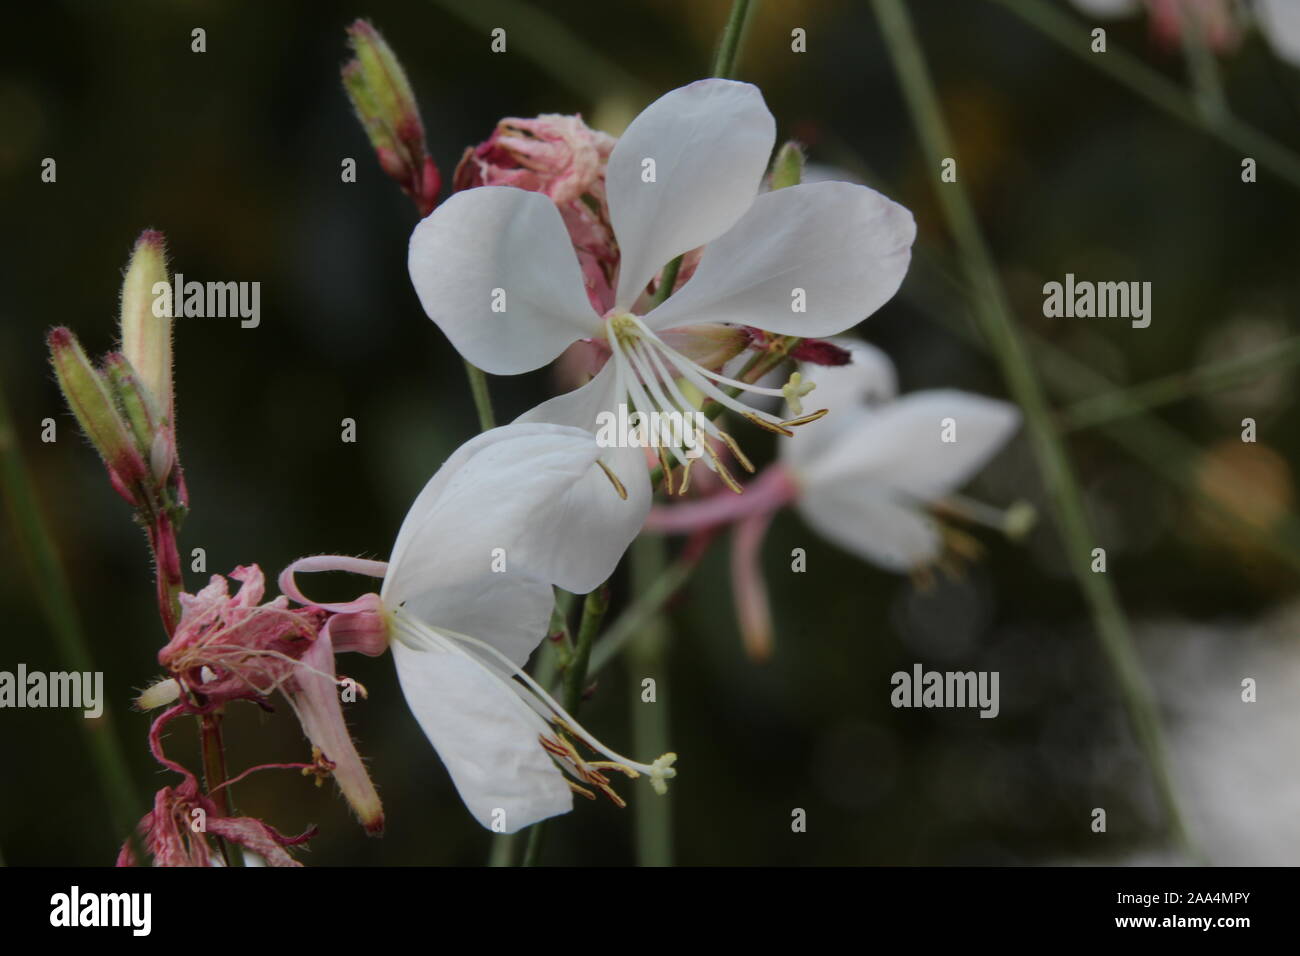 White flower of an apple tree Stock Photo